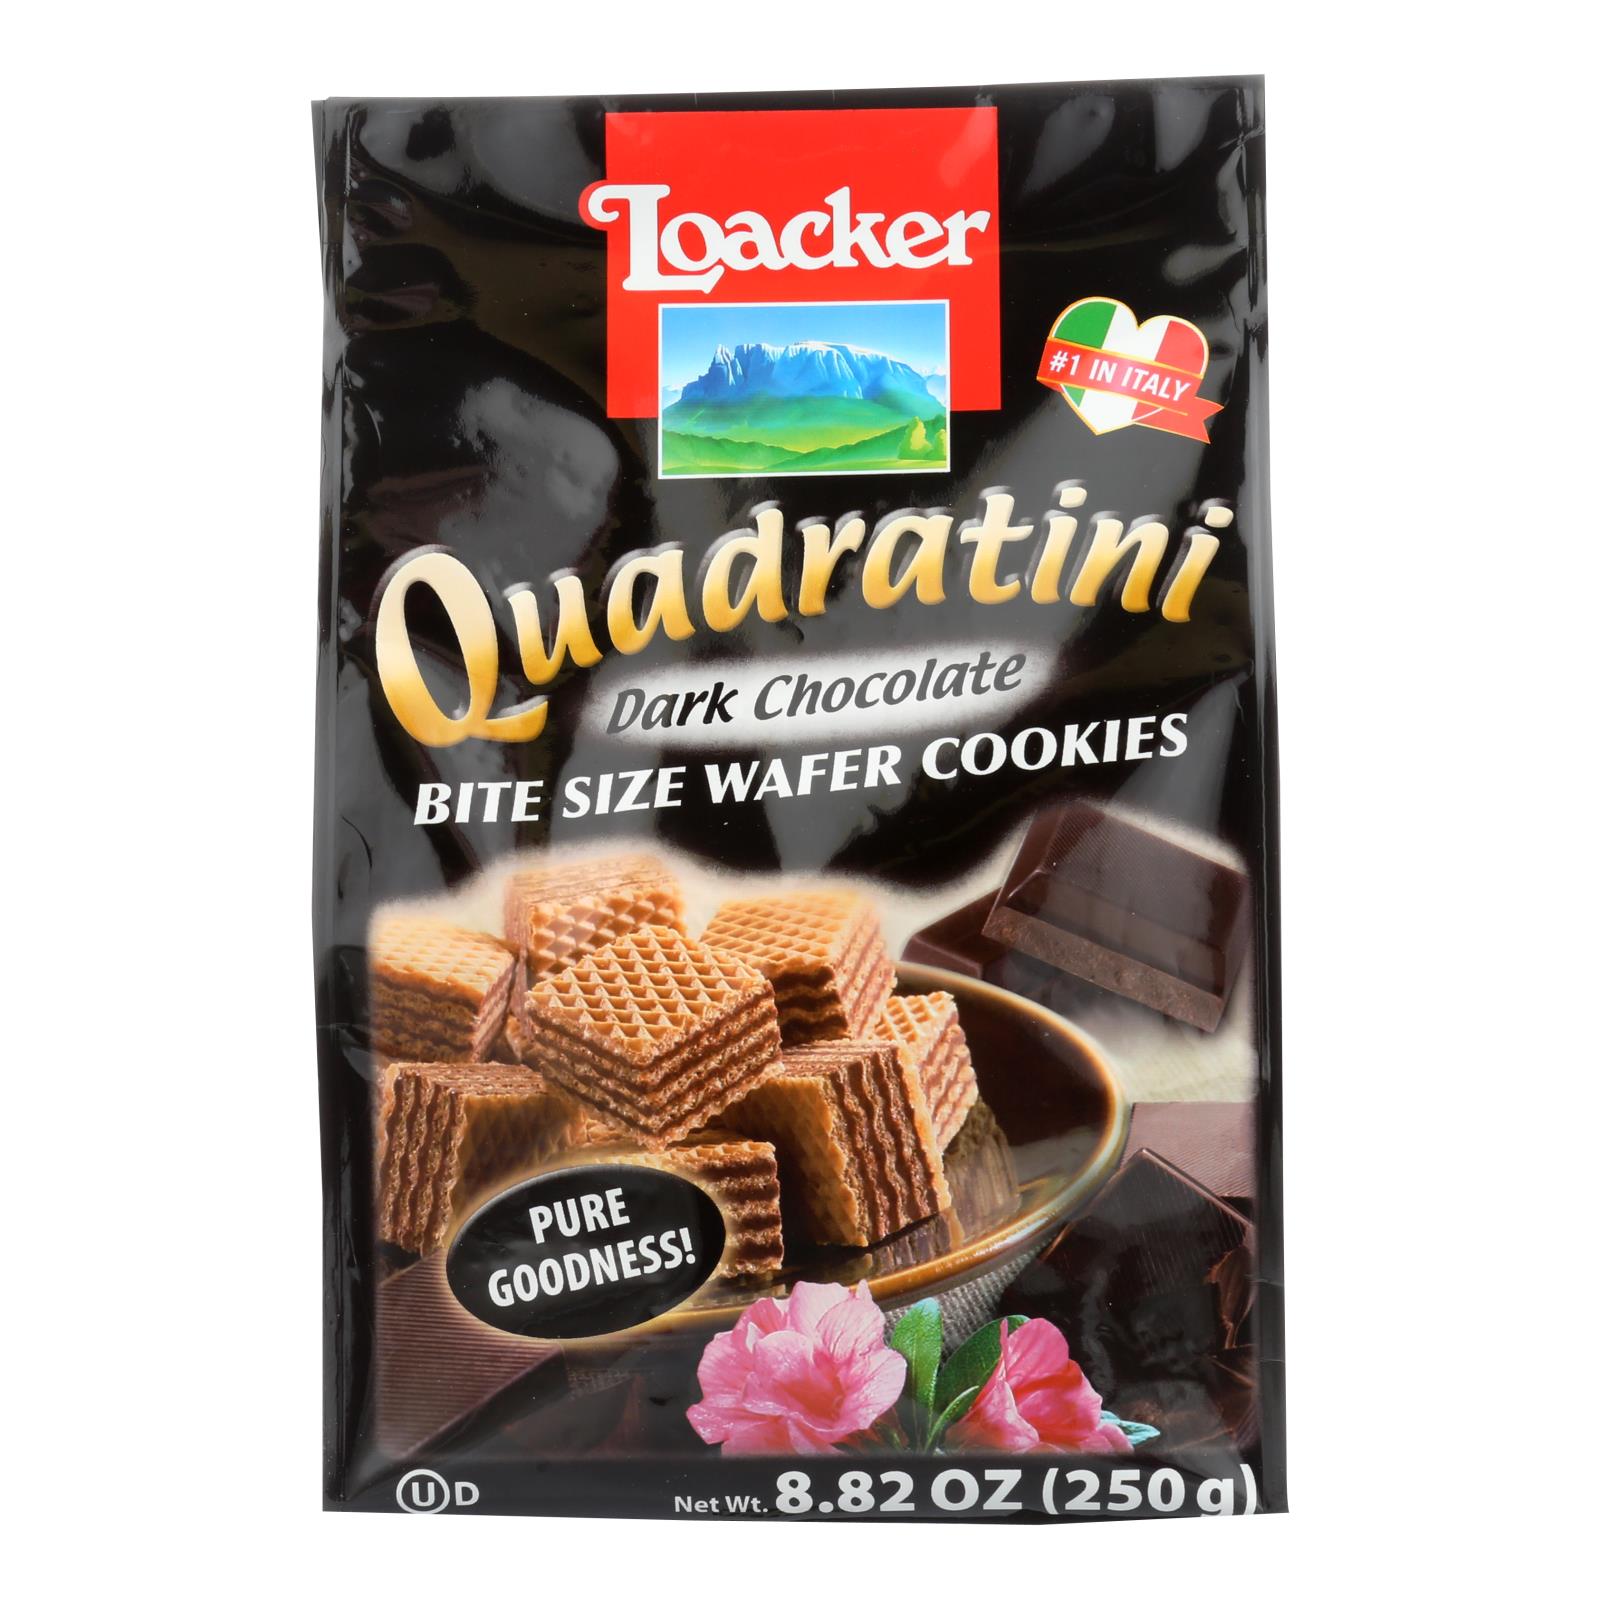 Loacker Quadratini Dark Chocolate Wafer Cookies - 6개 묶음상품 - 8.82 OZ